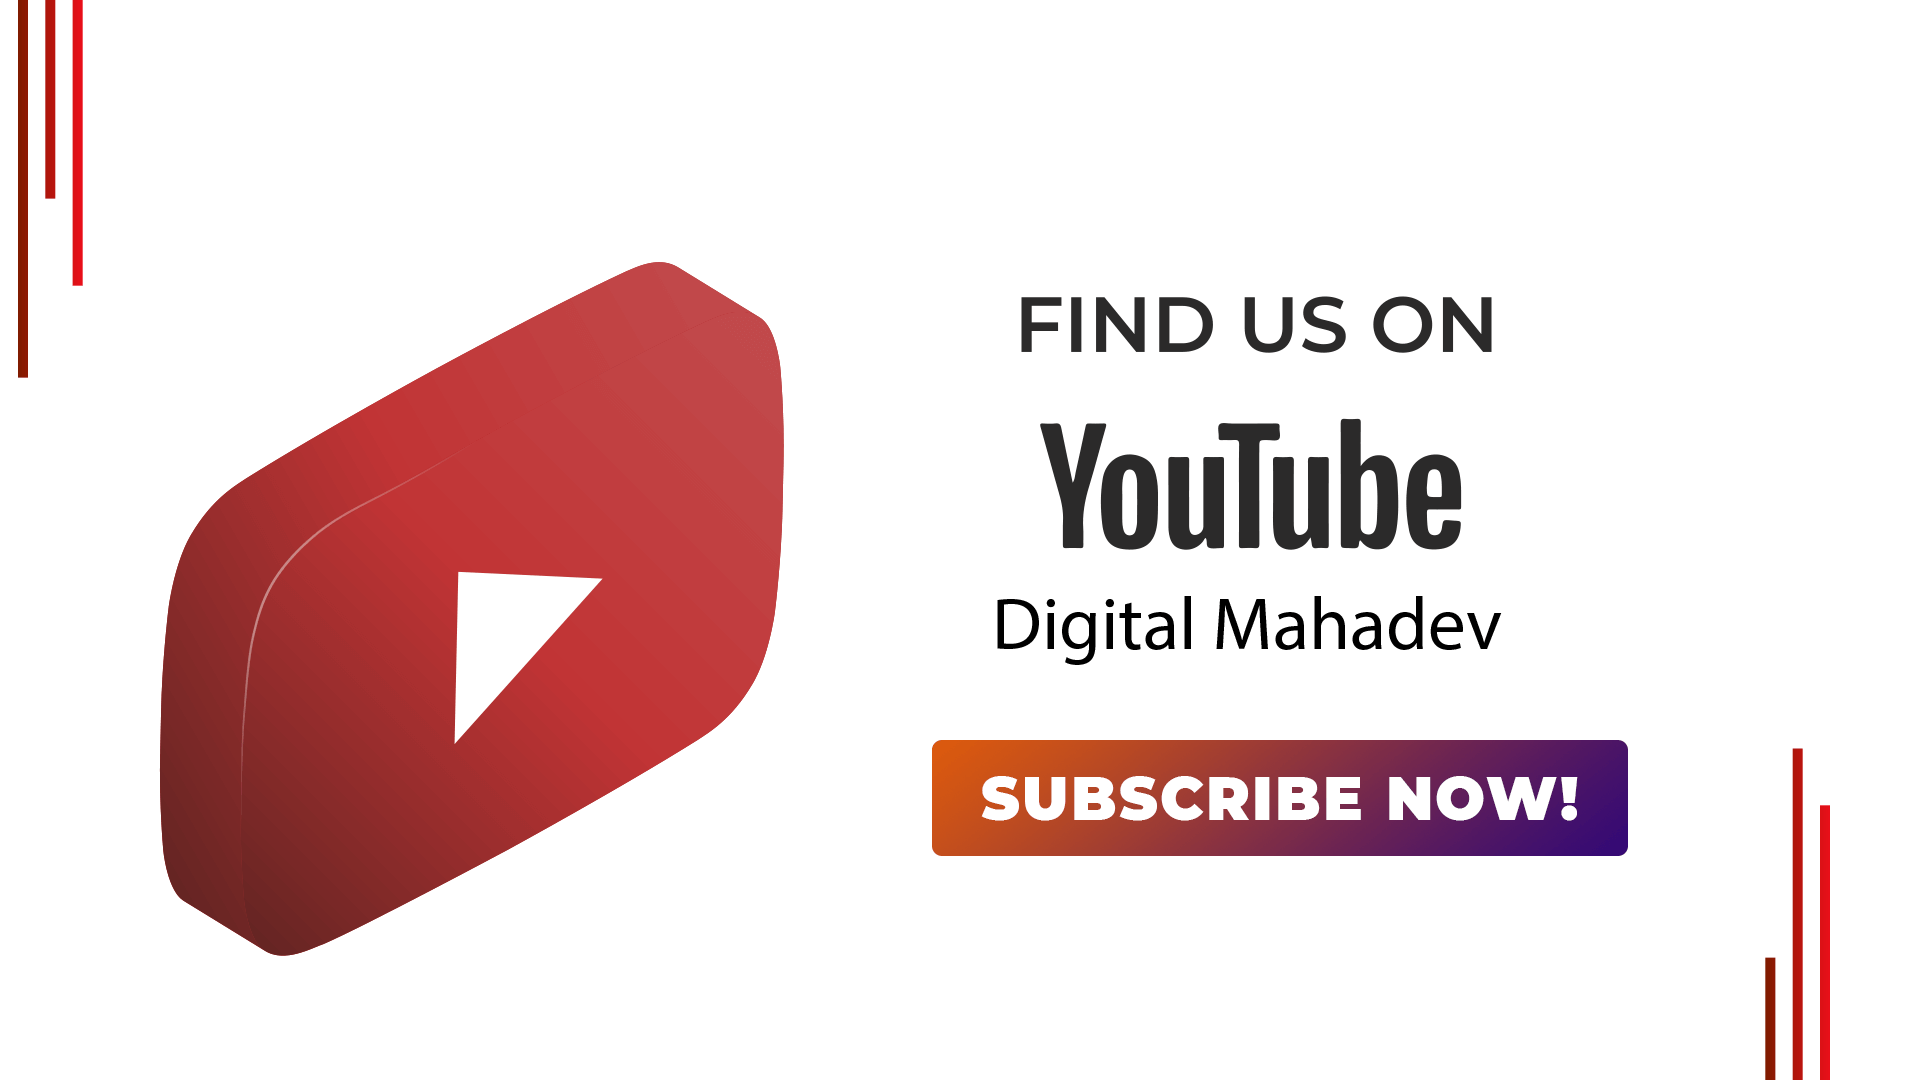 Digital mahadev youtube